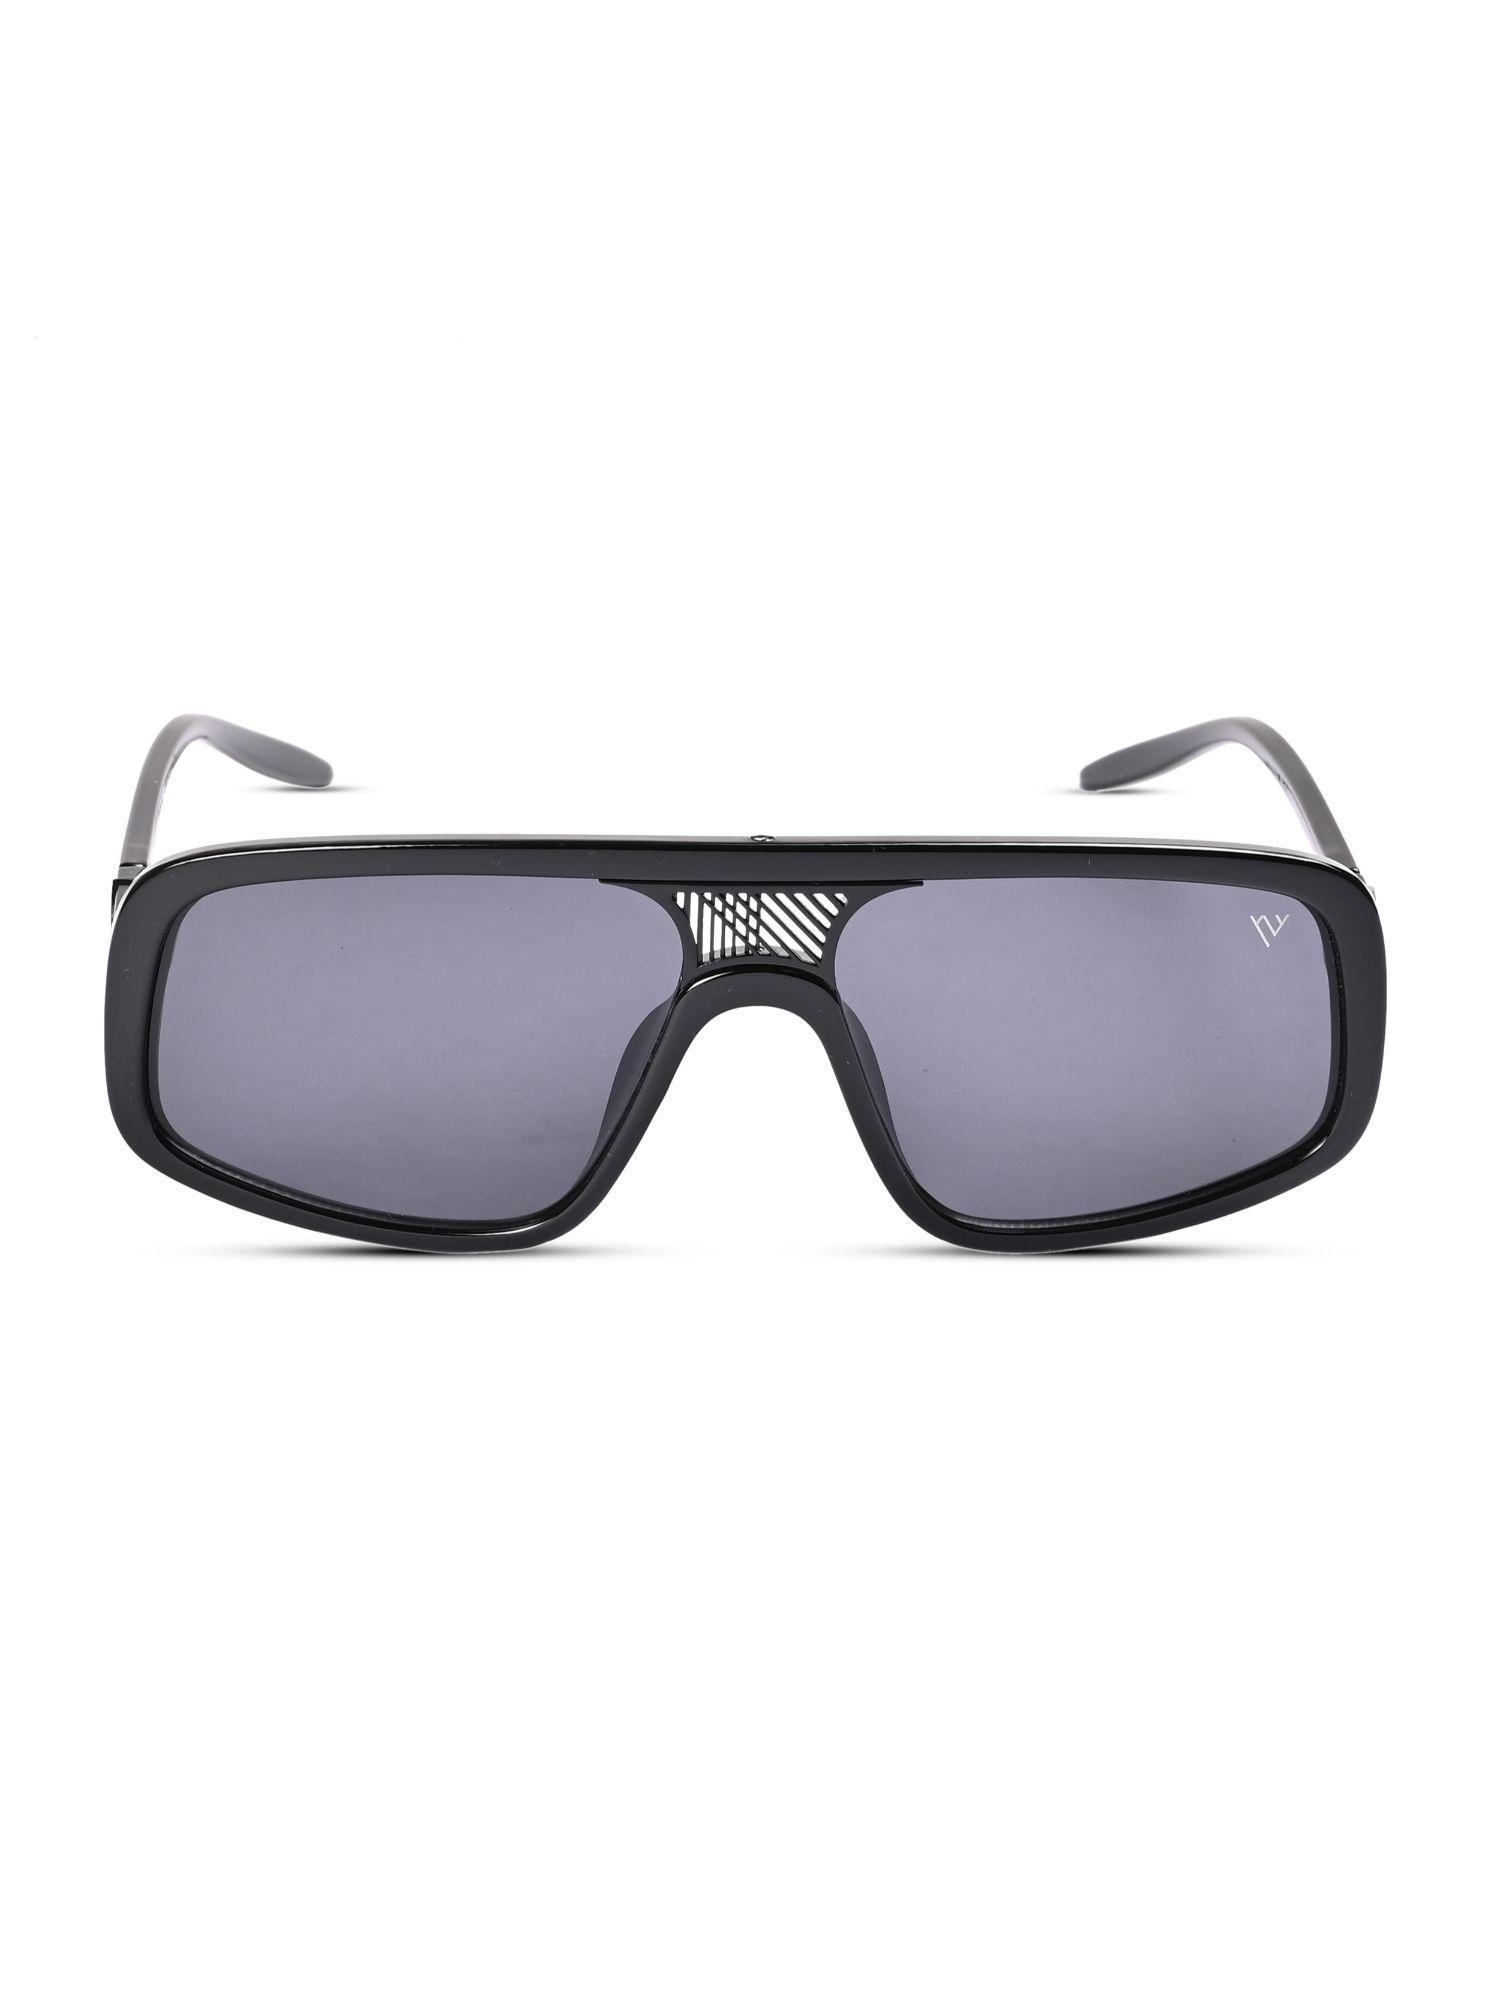 grey rectangle sunglasses for men & women - 2846mg4018 (65)